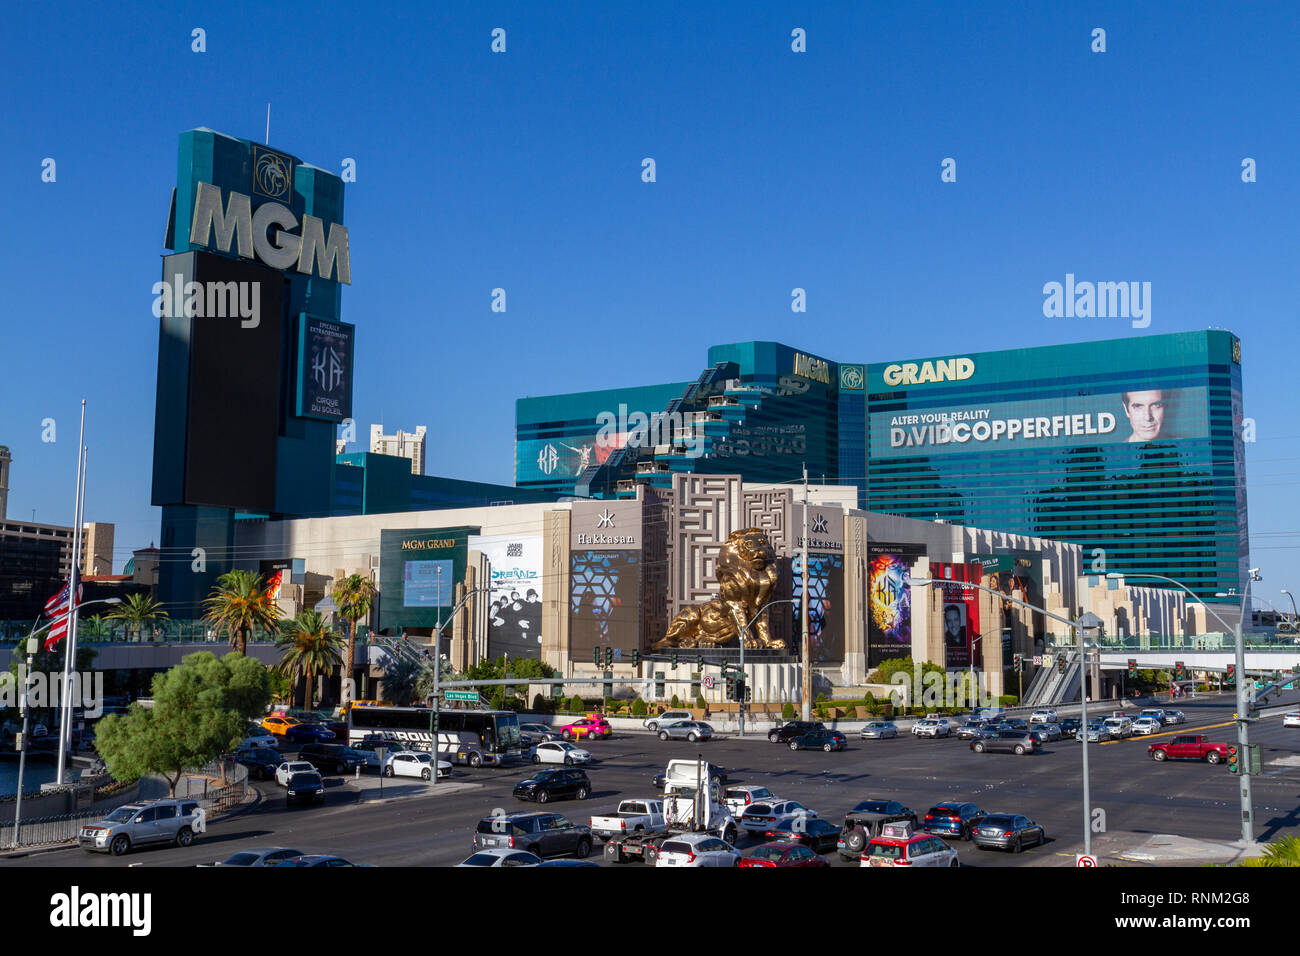 Das MGM Grand Hotel in Las Vegas am Strip von Las Vegas, Nevada, USA. Stockfoto